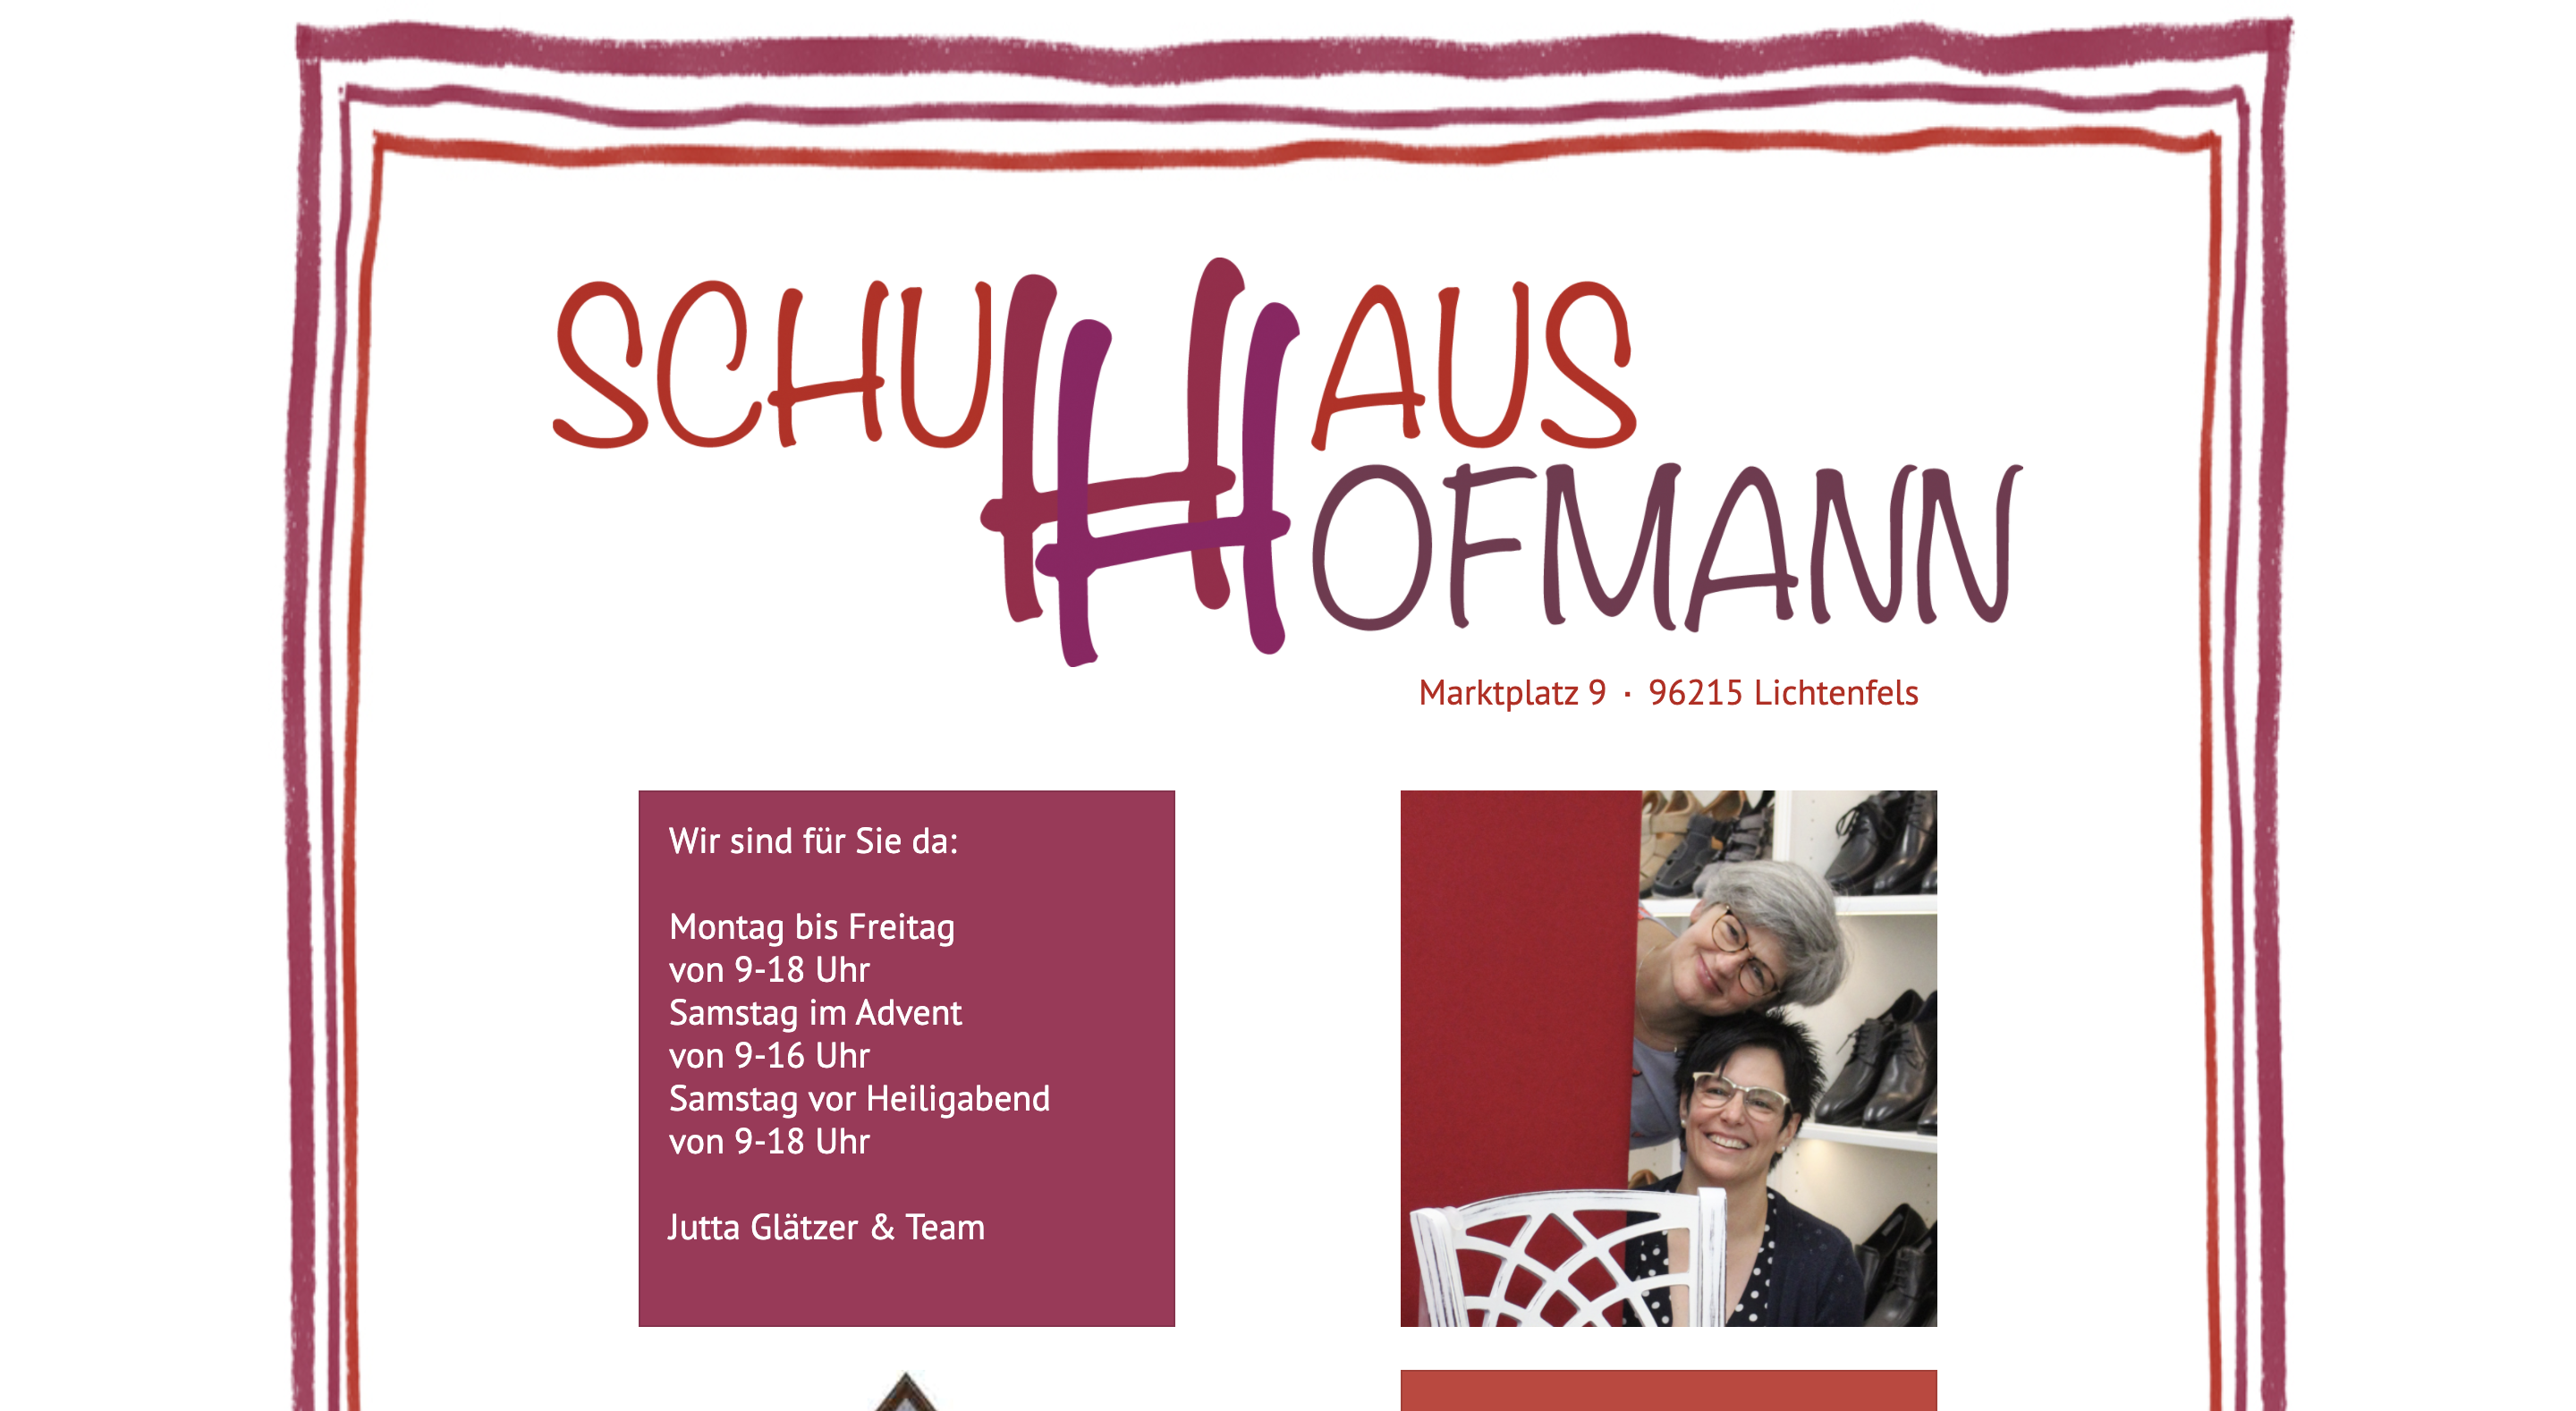 Schuhhaus-Hofmann